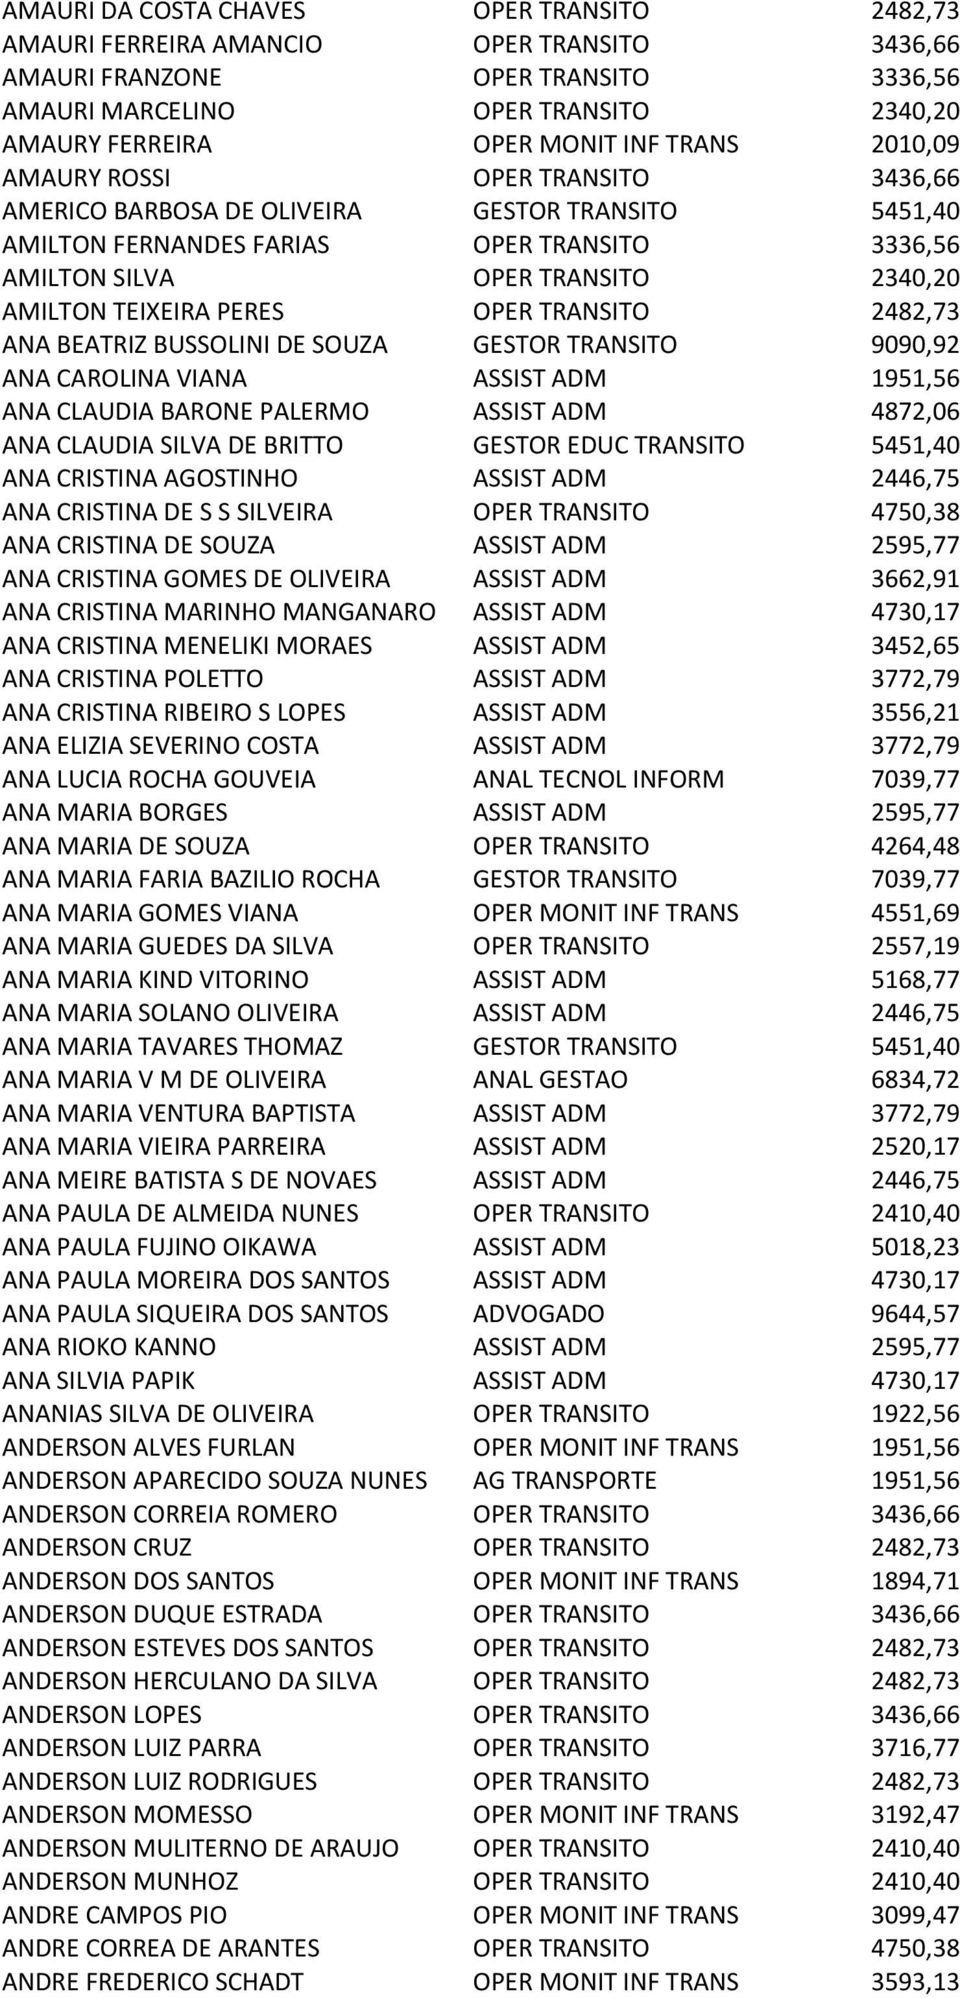 TEIXEIRA PERES OPER TRANSITO 2482,73 ANA BEATRIZ BUSSOLINI DE SOUZA GESTOR TRANSITO 9090,92 ANA CAROLINA VIANA ASSIST ADM 1951,56 ANA CLAUDIA BARONE PALERMO ASSIST ADM 4872,06 ANA CLAUDIA SILVA DE